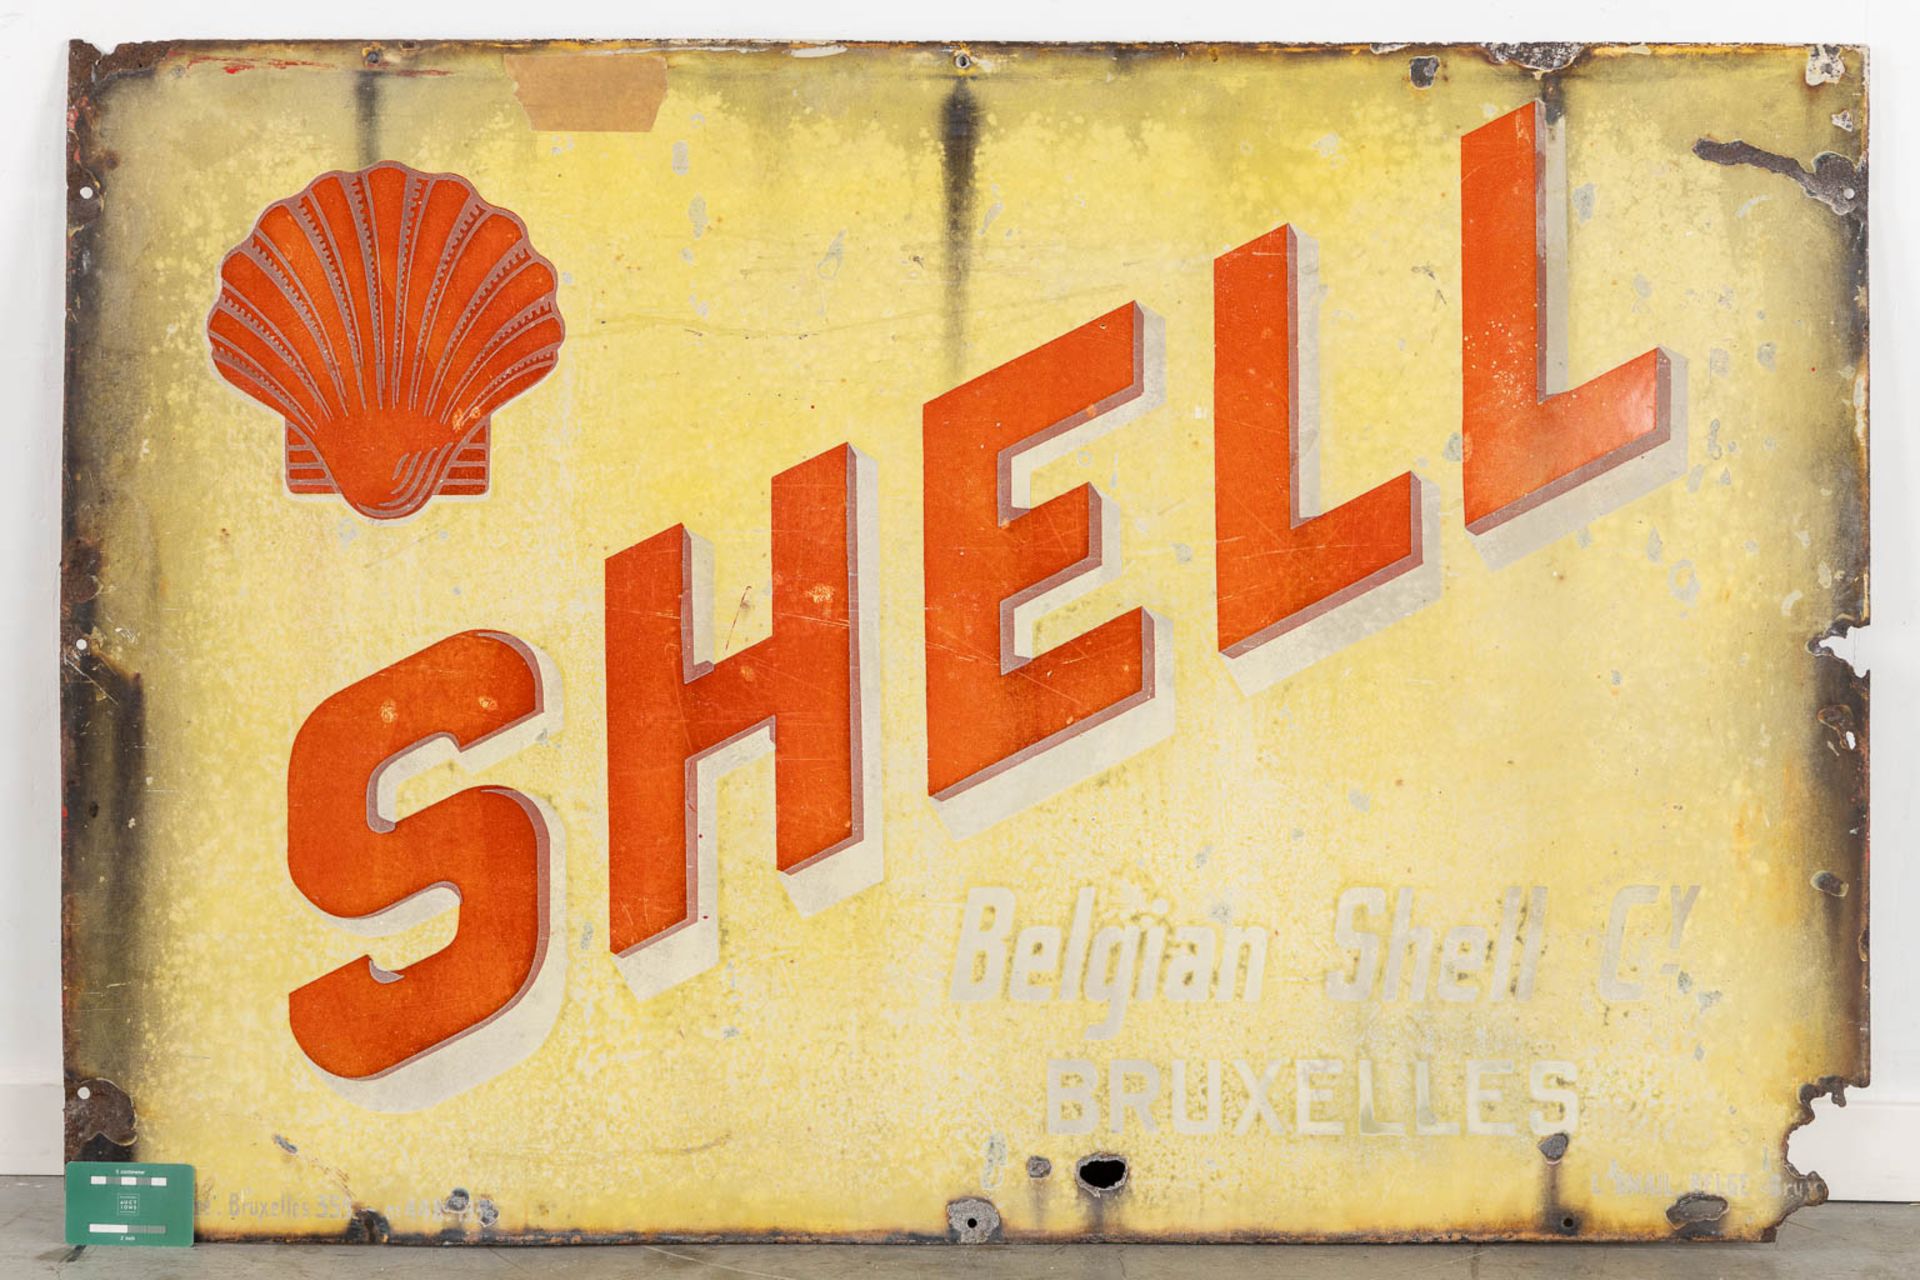 Shell Belgian Shell Company, Bruxelles, an enamel plate. (W:120 x H:80 cm) - Image 2 of 9